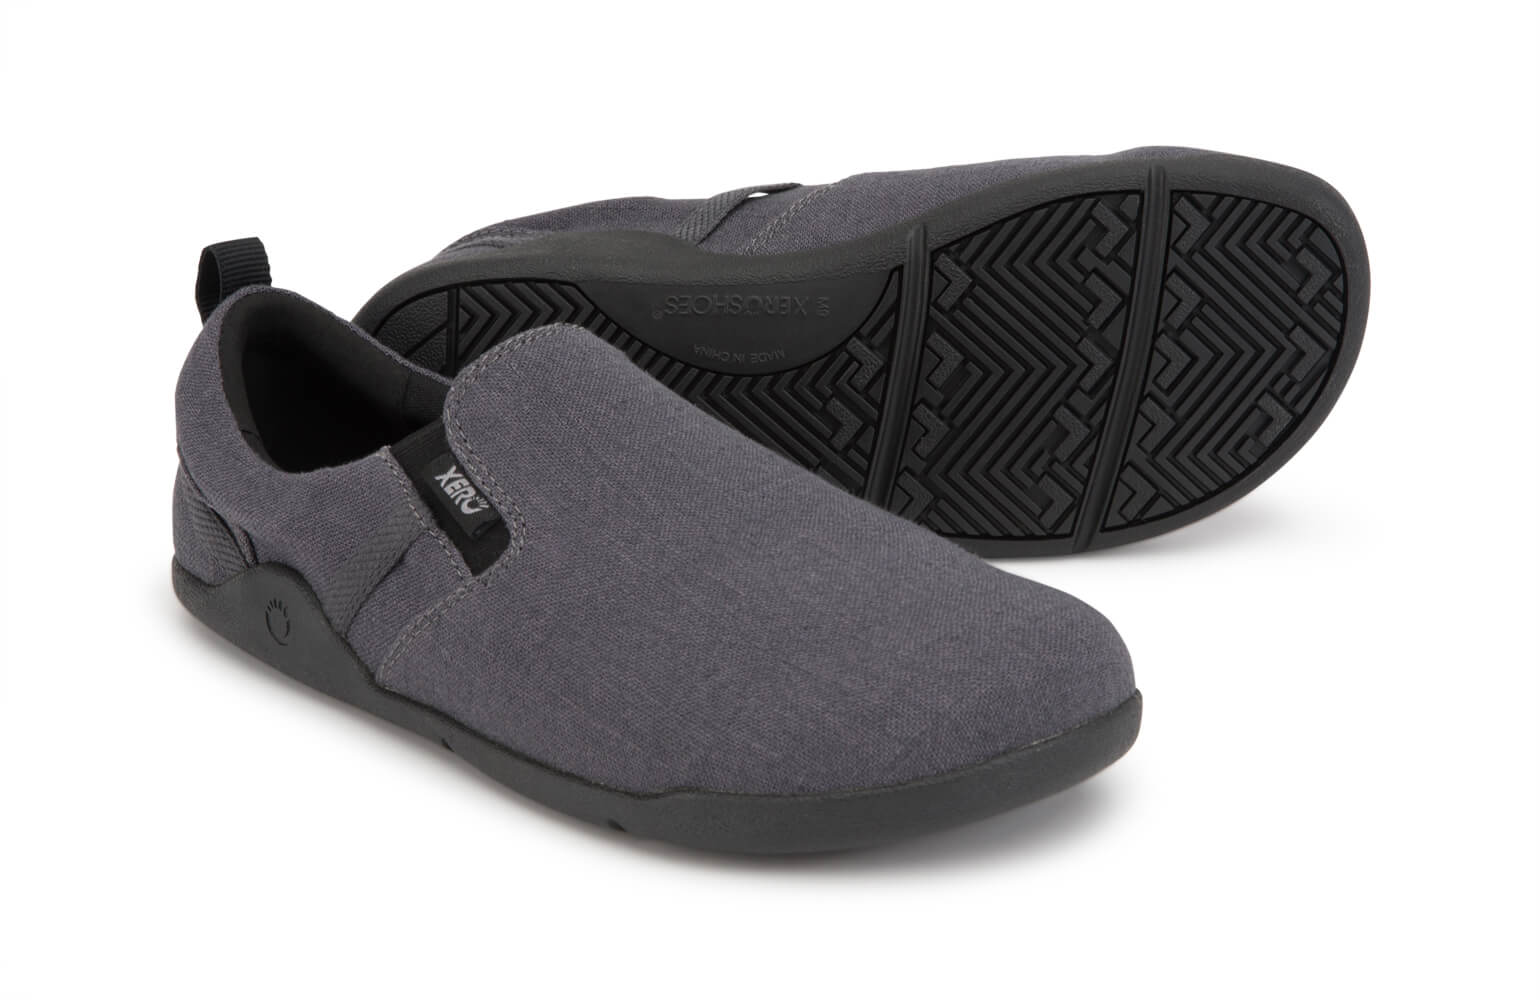 Aptos - A casual, barefoot friendly, minimalist lightweight slip-on - Men's